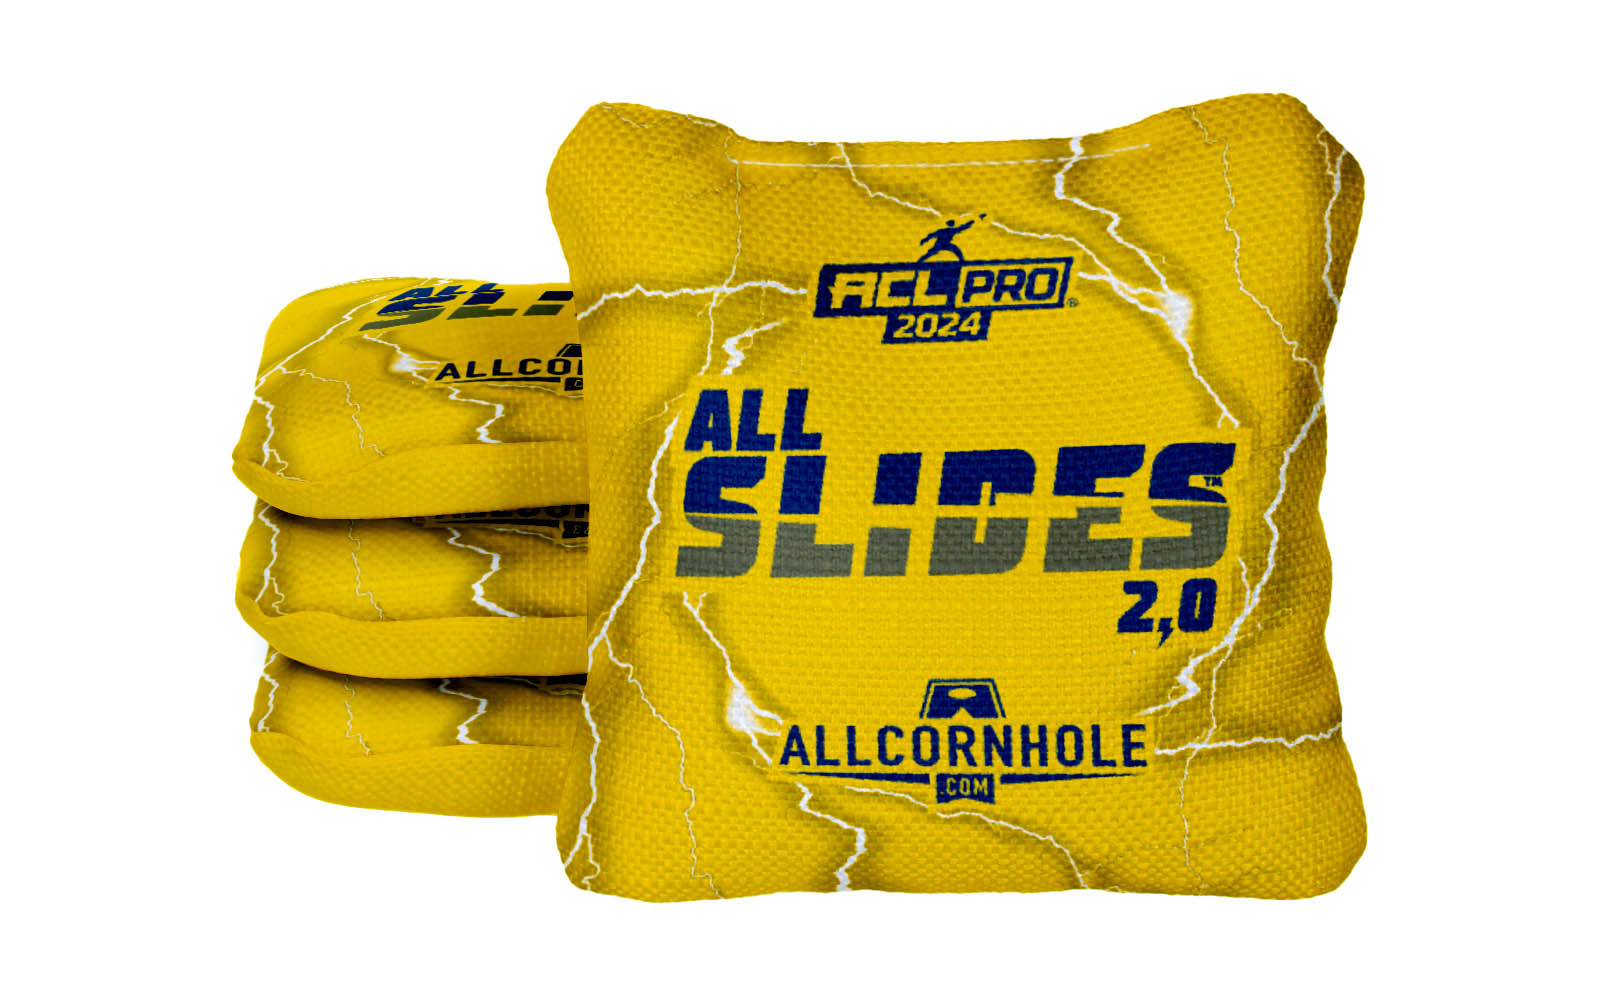 Officially Licensed Collegiate Cornhole Bags - AllCornhole All-Slide 2.0 - Set of 4 - West Virginia University